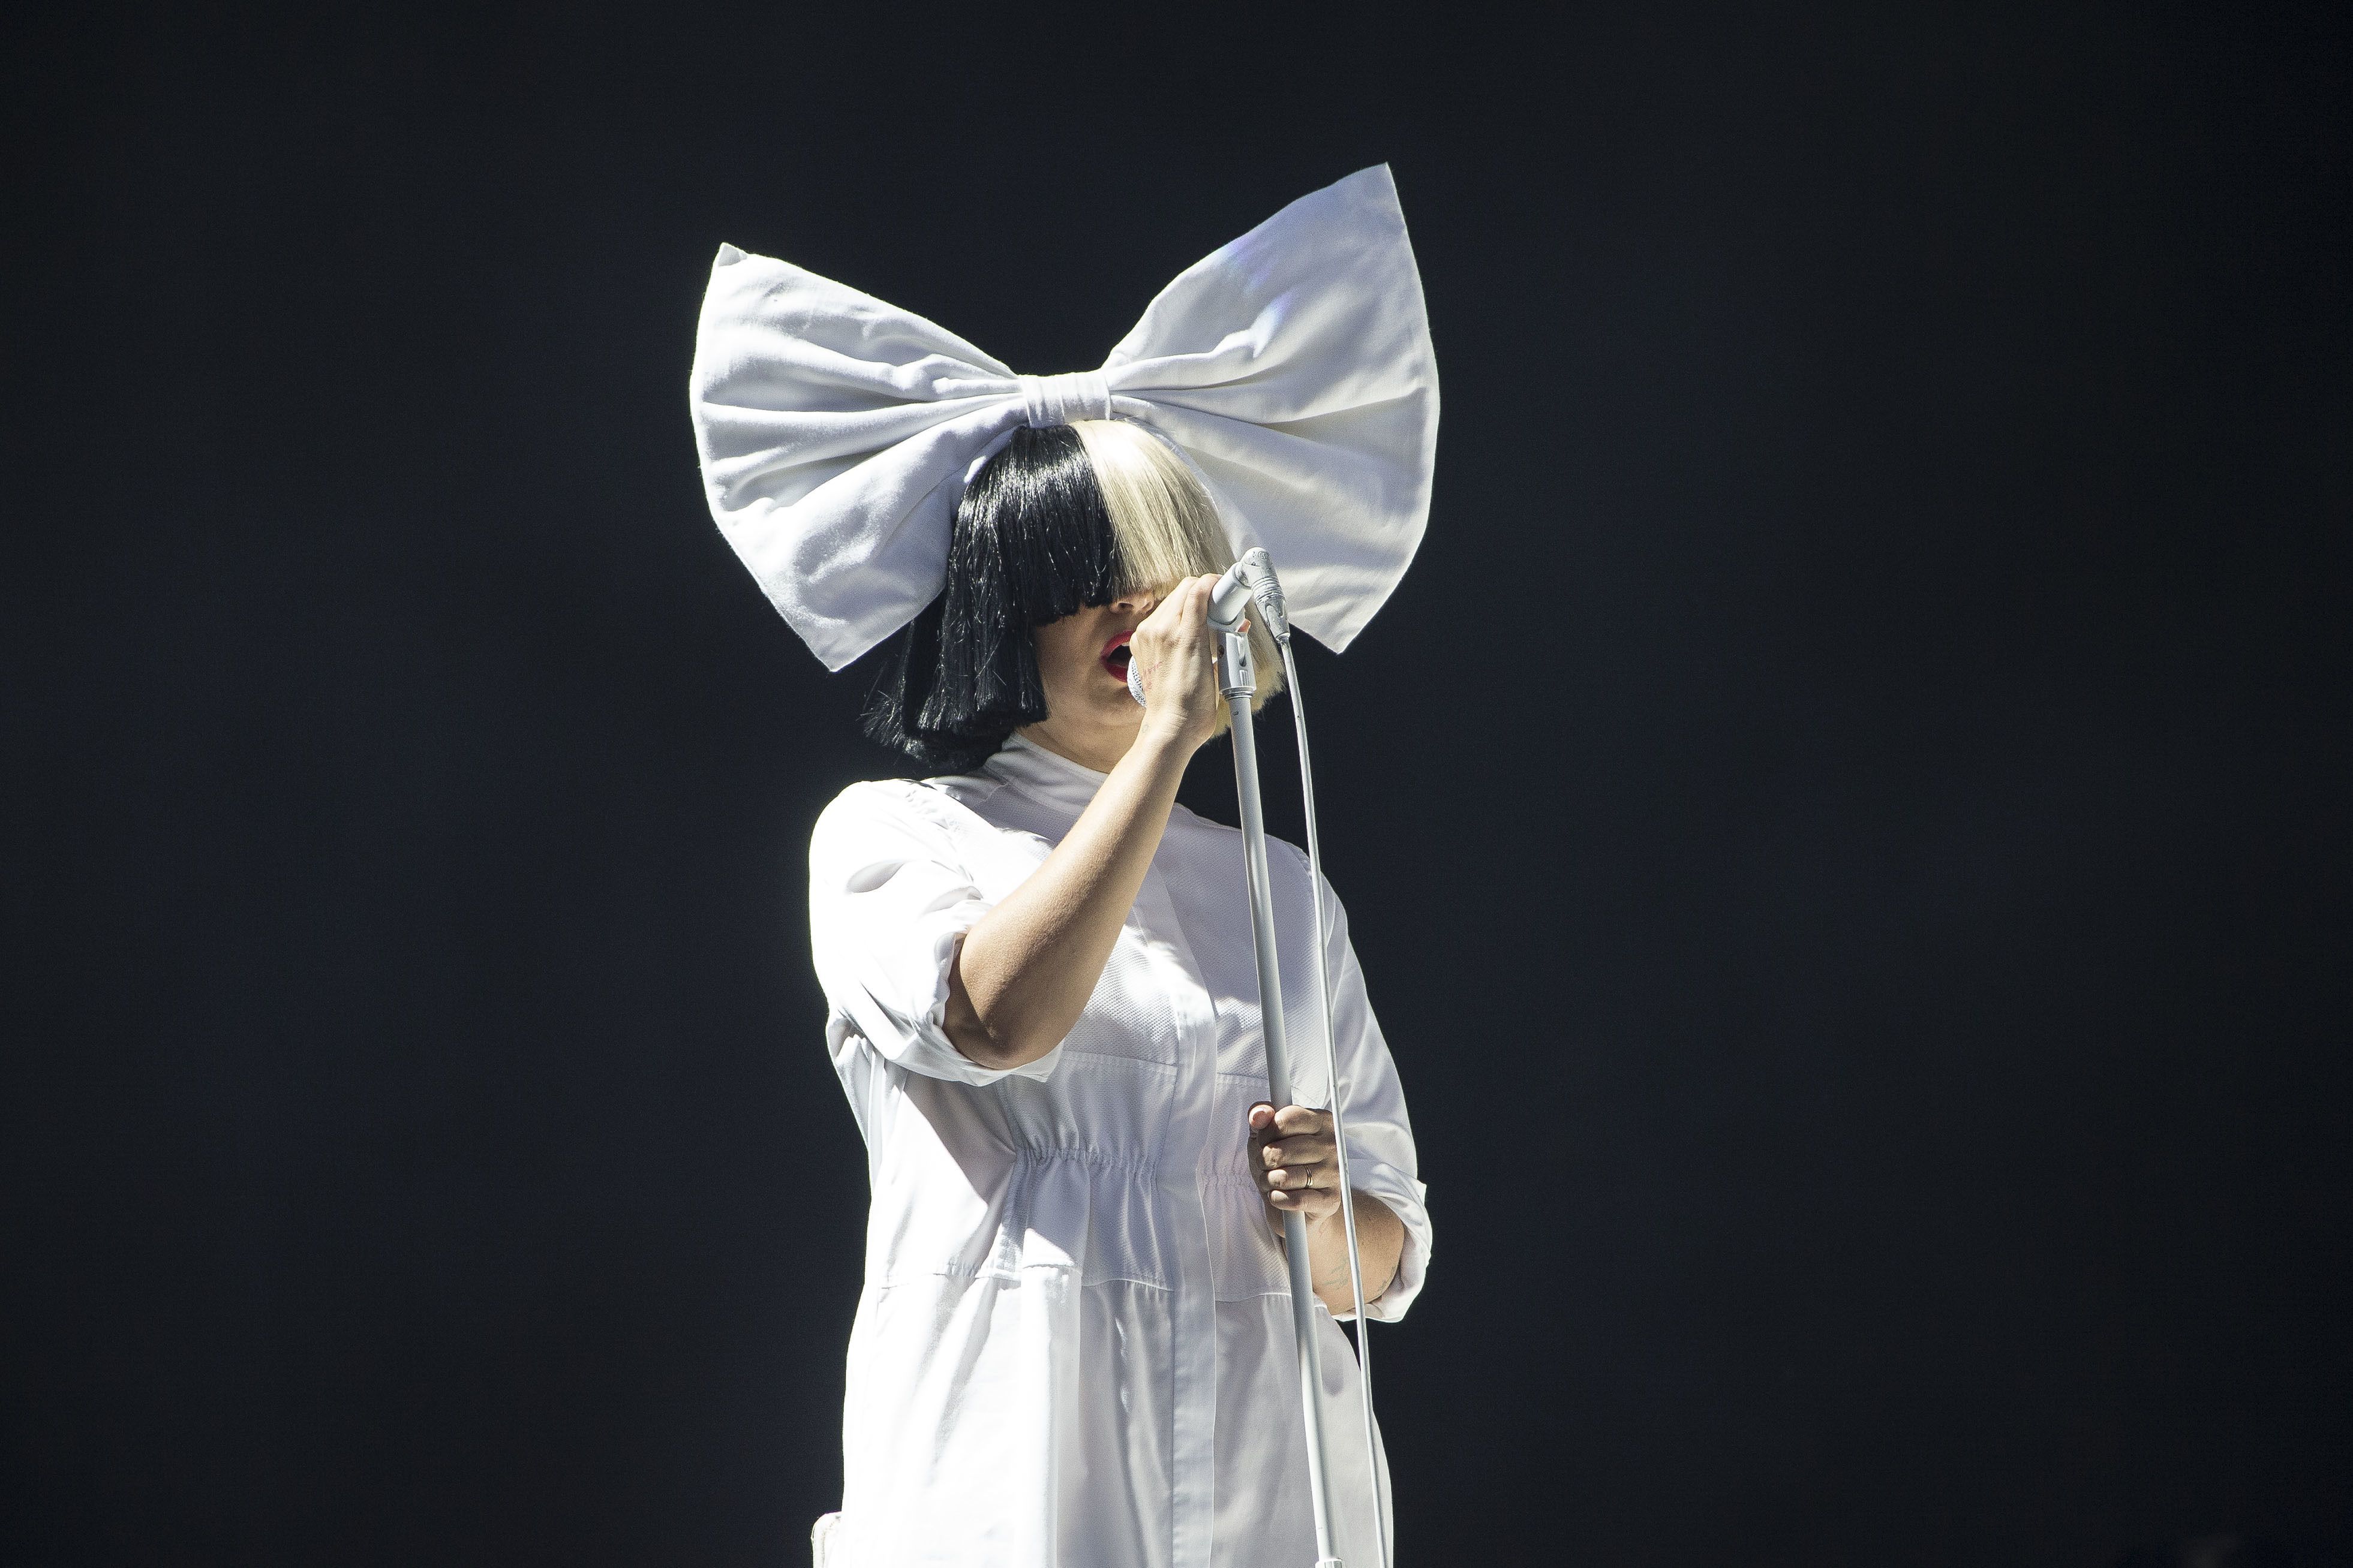 Певица Sia хотела совершить самоубийство